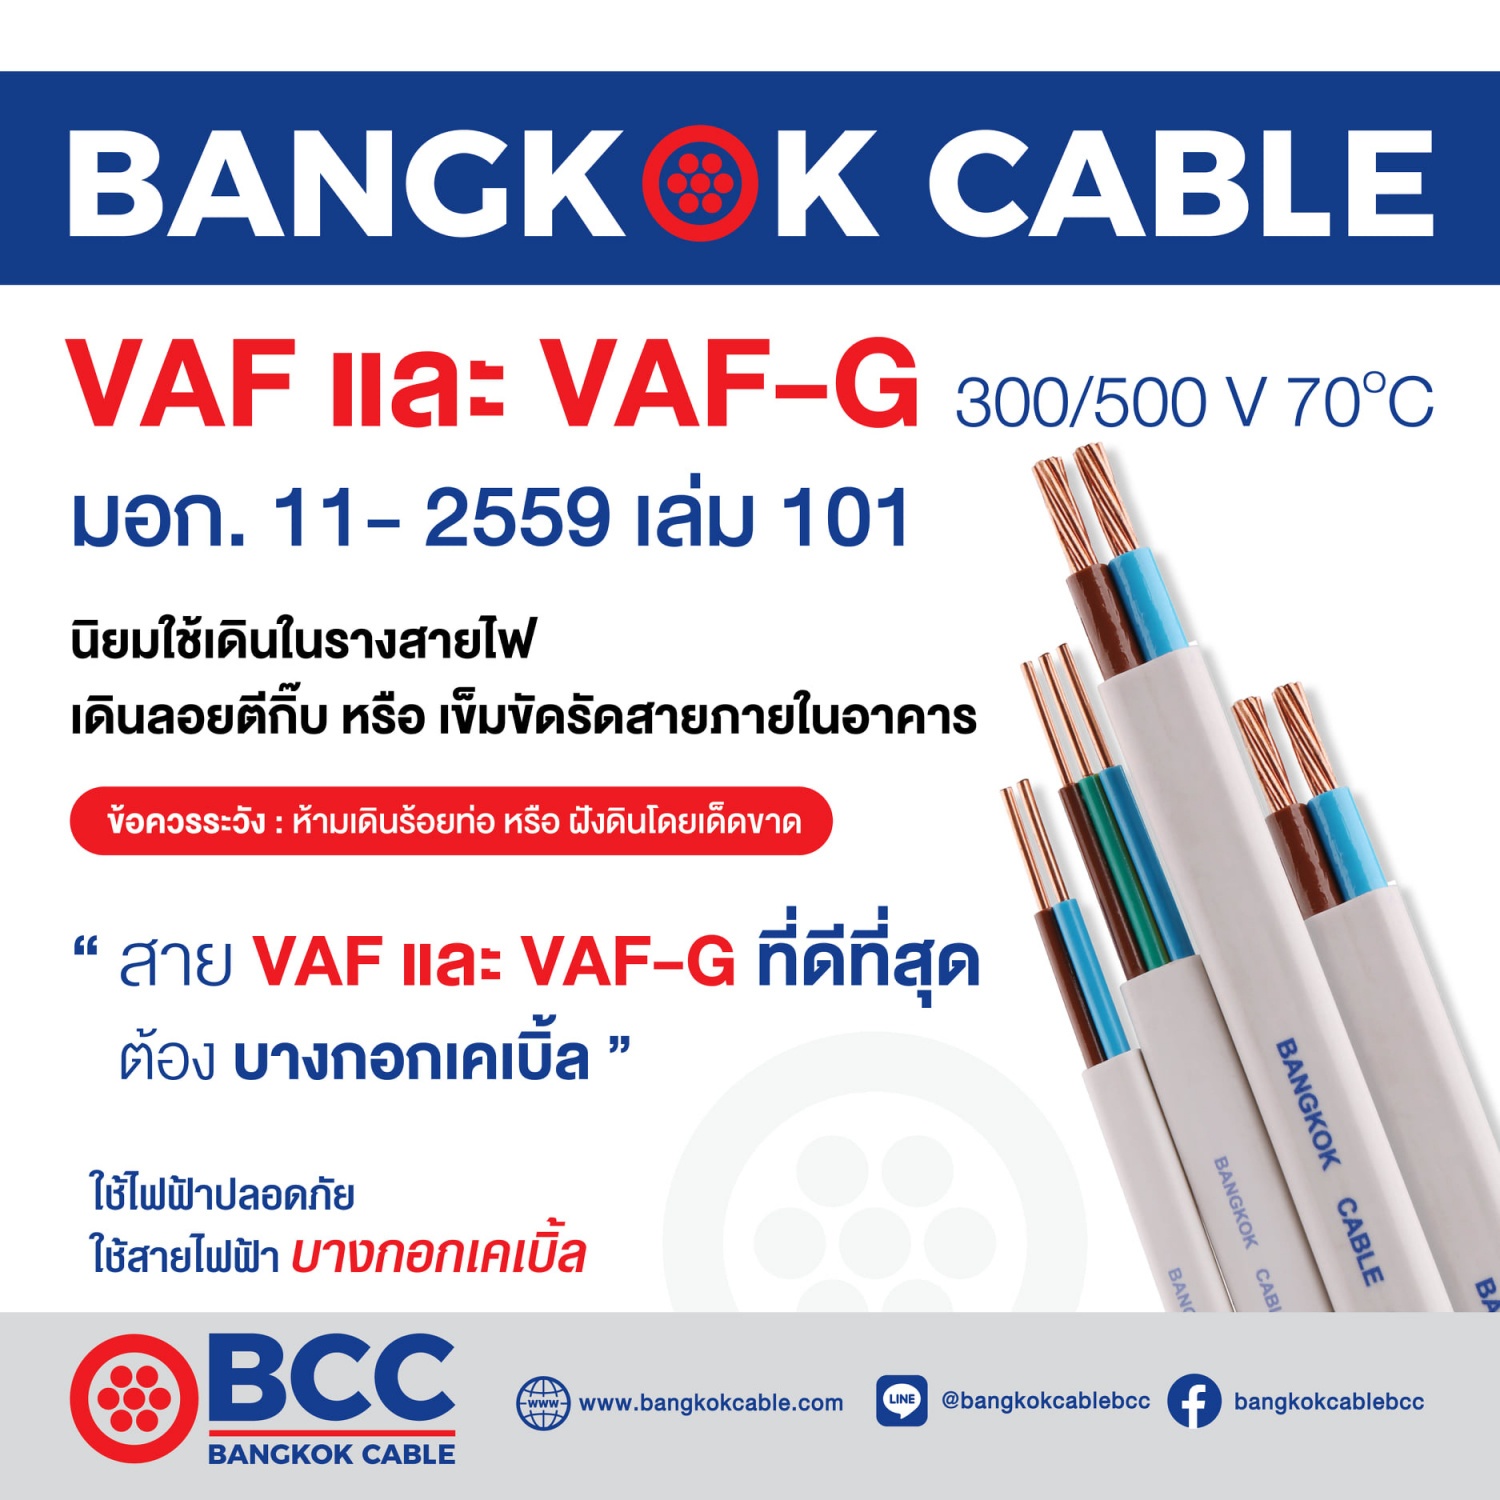 BCC สายไฟ VAF 2x2.5 SQ.MM. 30ม. สีขาว